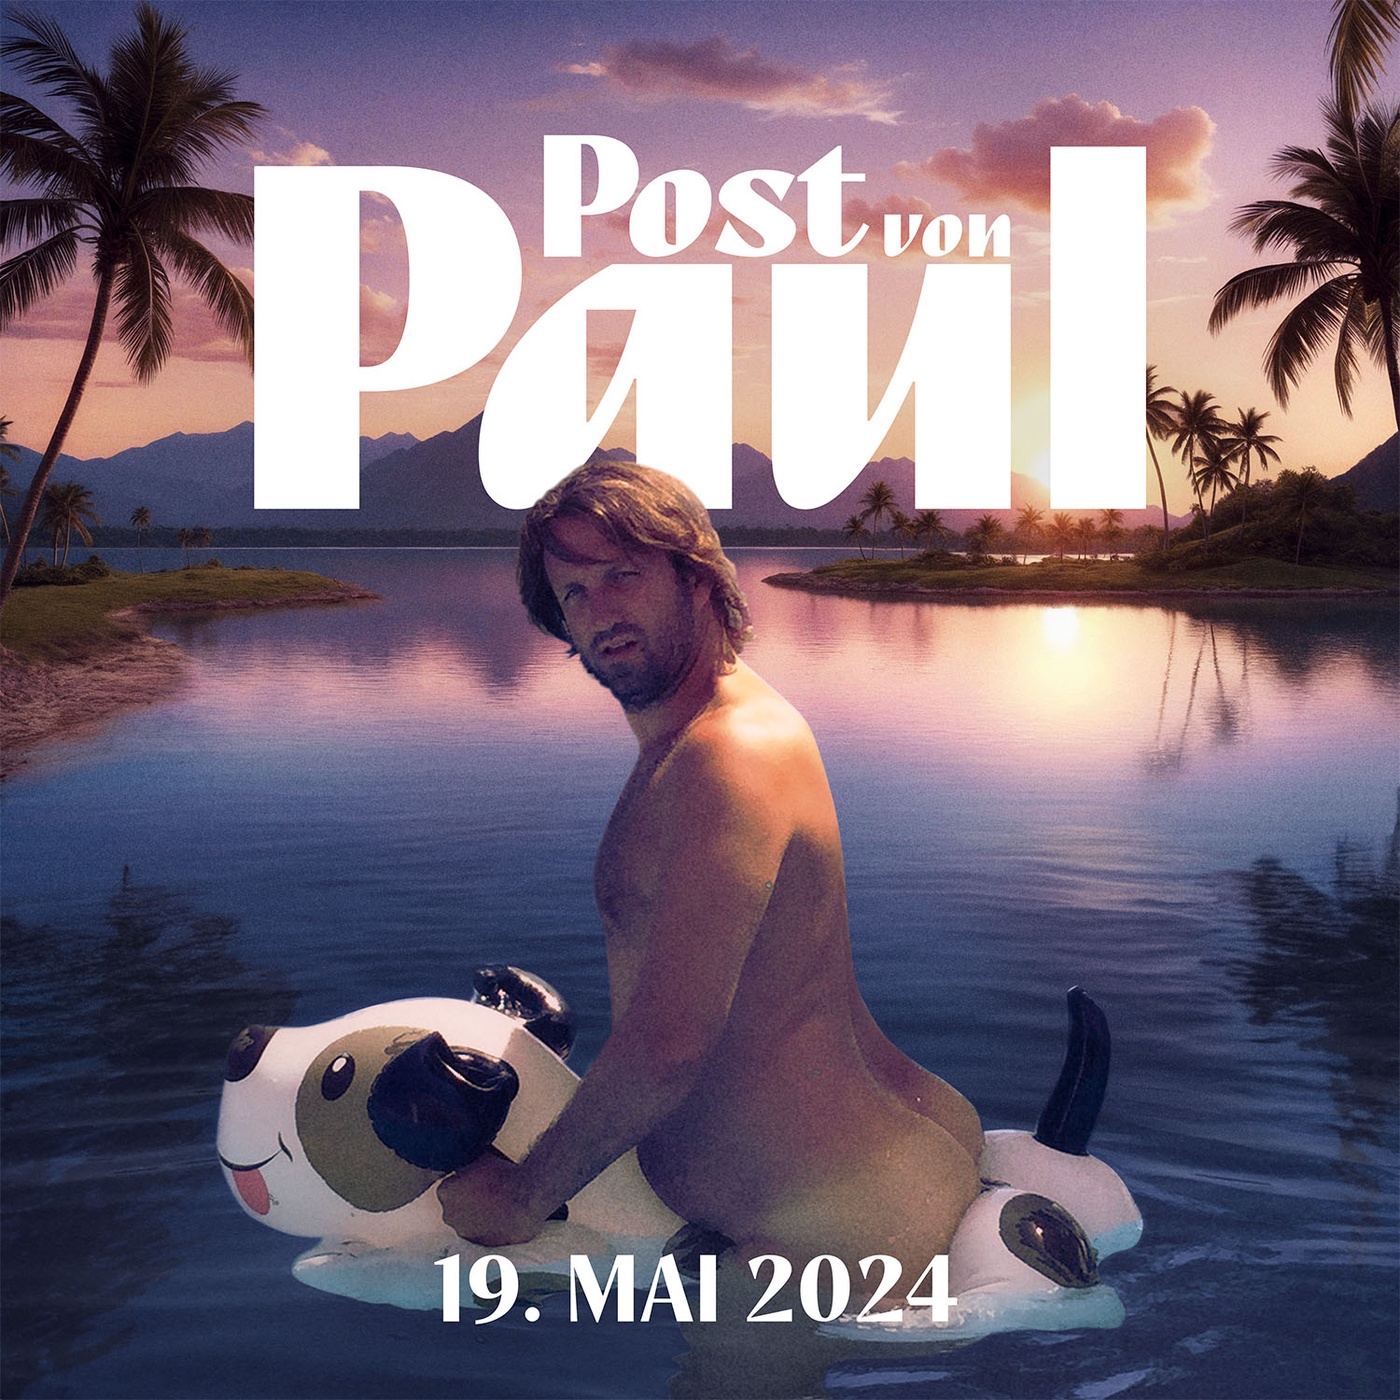 #536 🗞️ POST VON PAUL am 19. Mai 2024